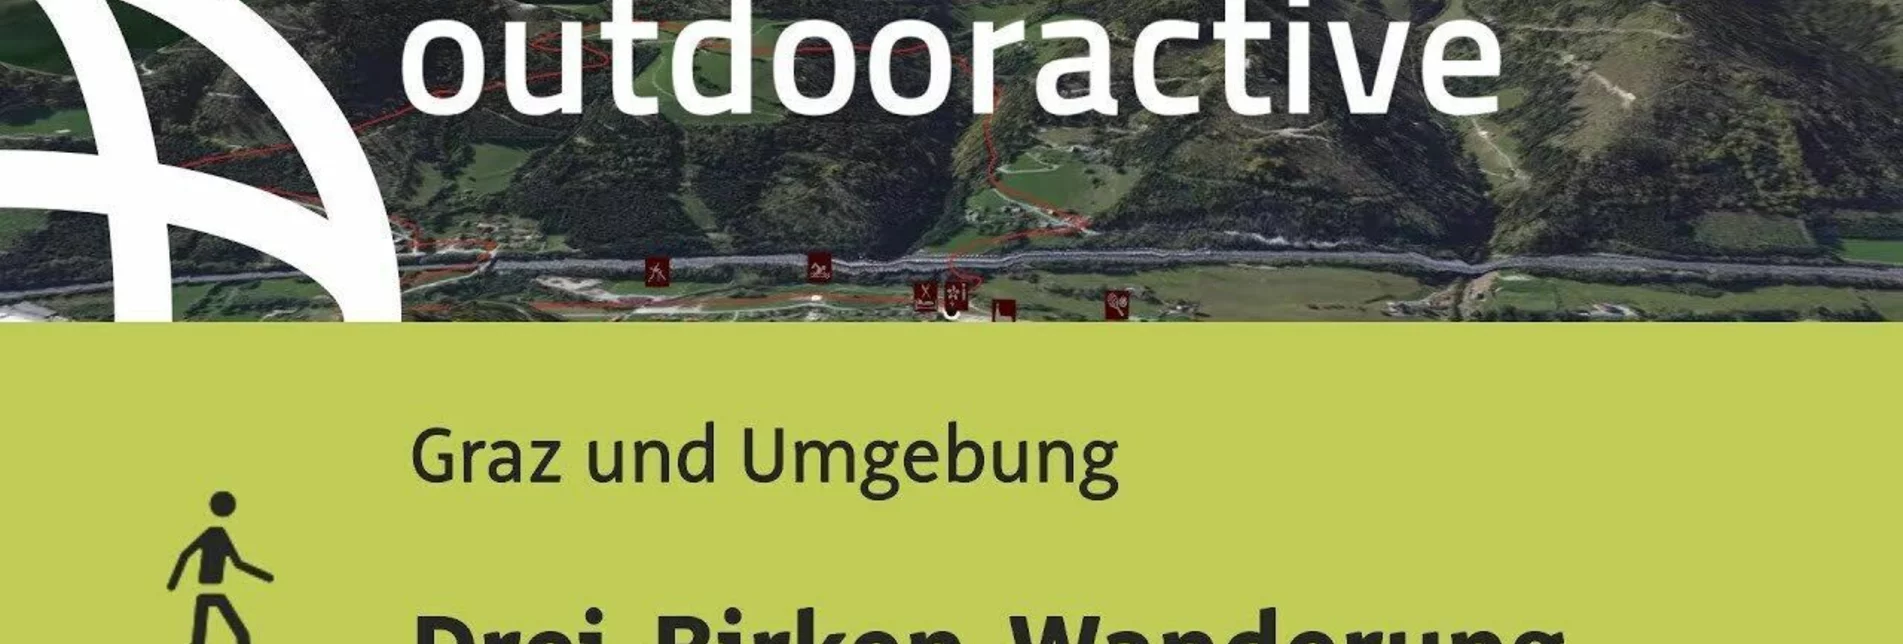 Hiking route Drei-Birken-Wanderung - Touren-Impression #1 | © Outdooractive – 3D Videos